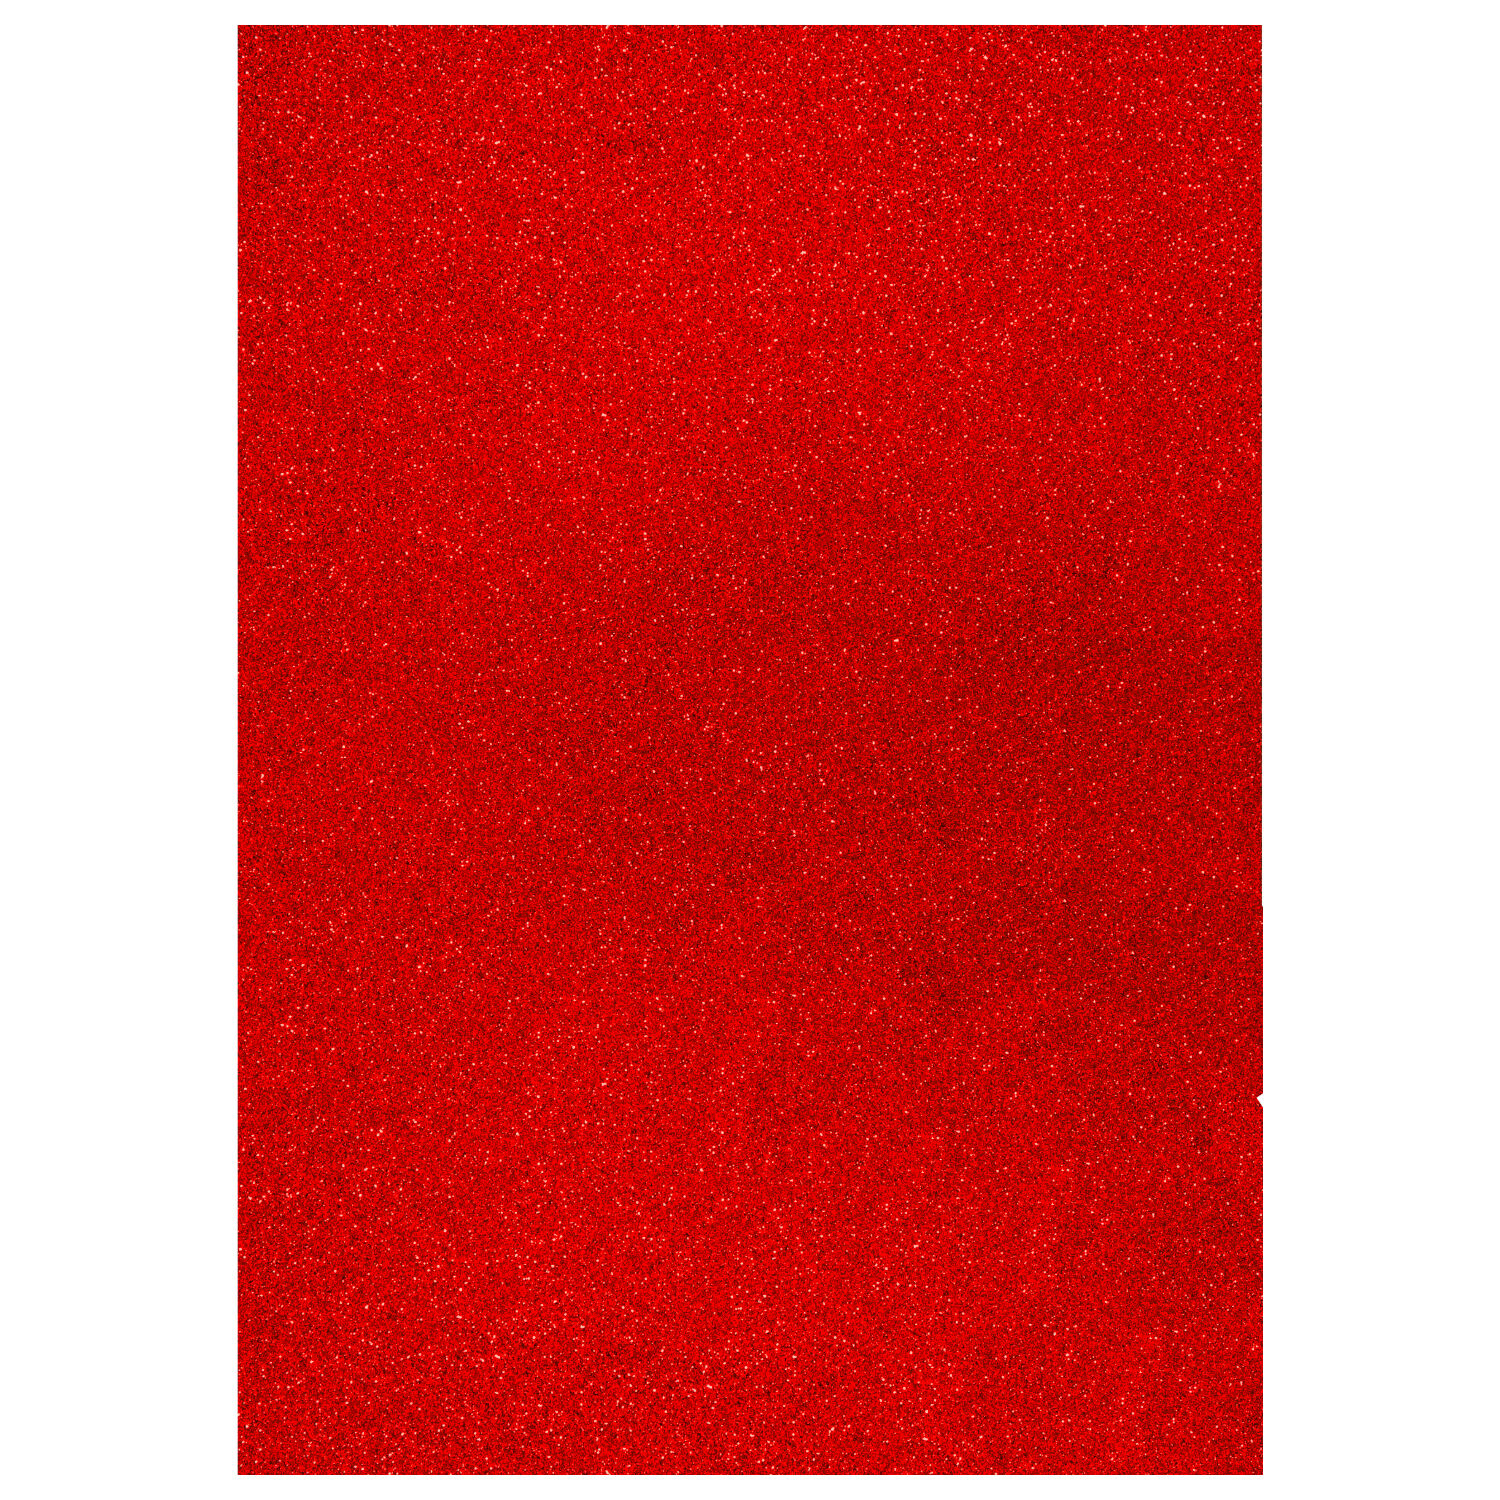 NEU Glitter-Karton, 200 g/qm, einseitig mit Glitzer, DIN A4, Rot